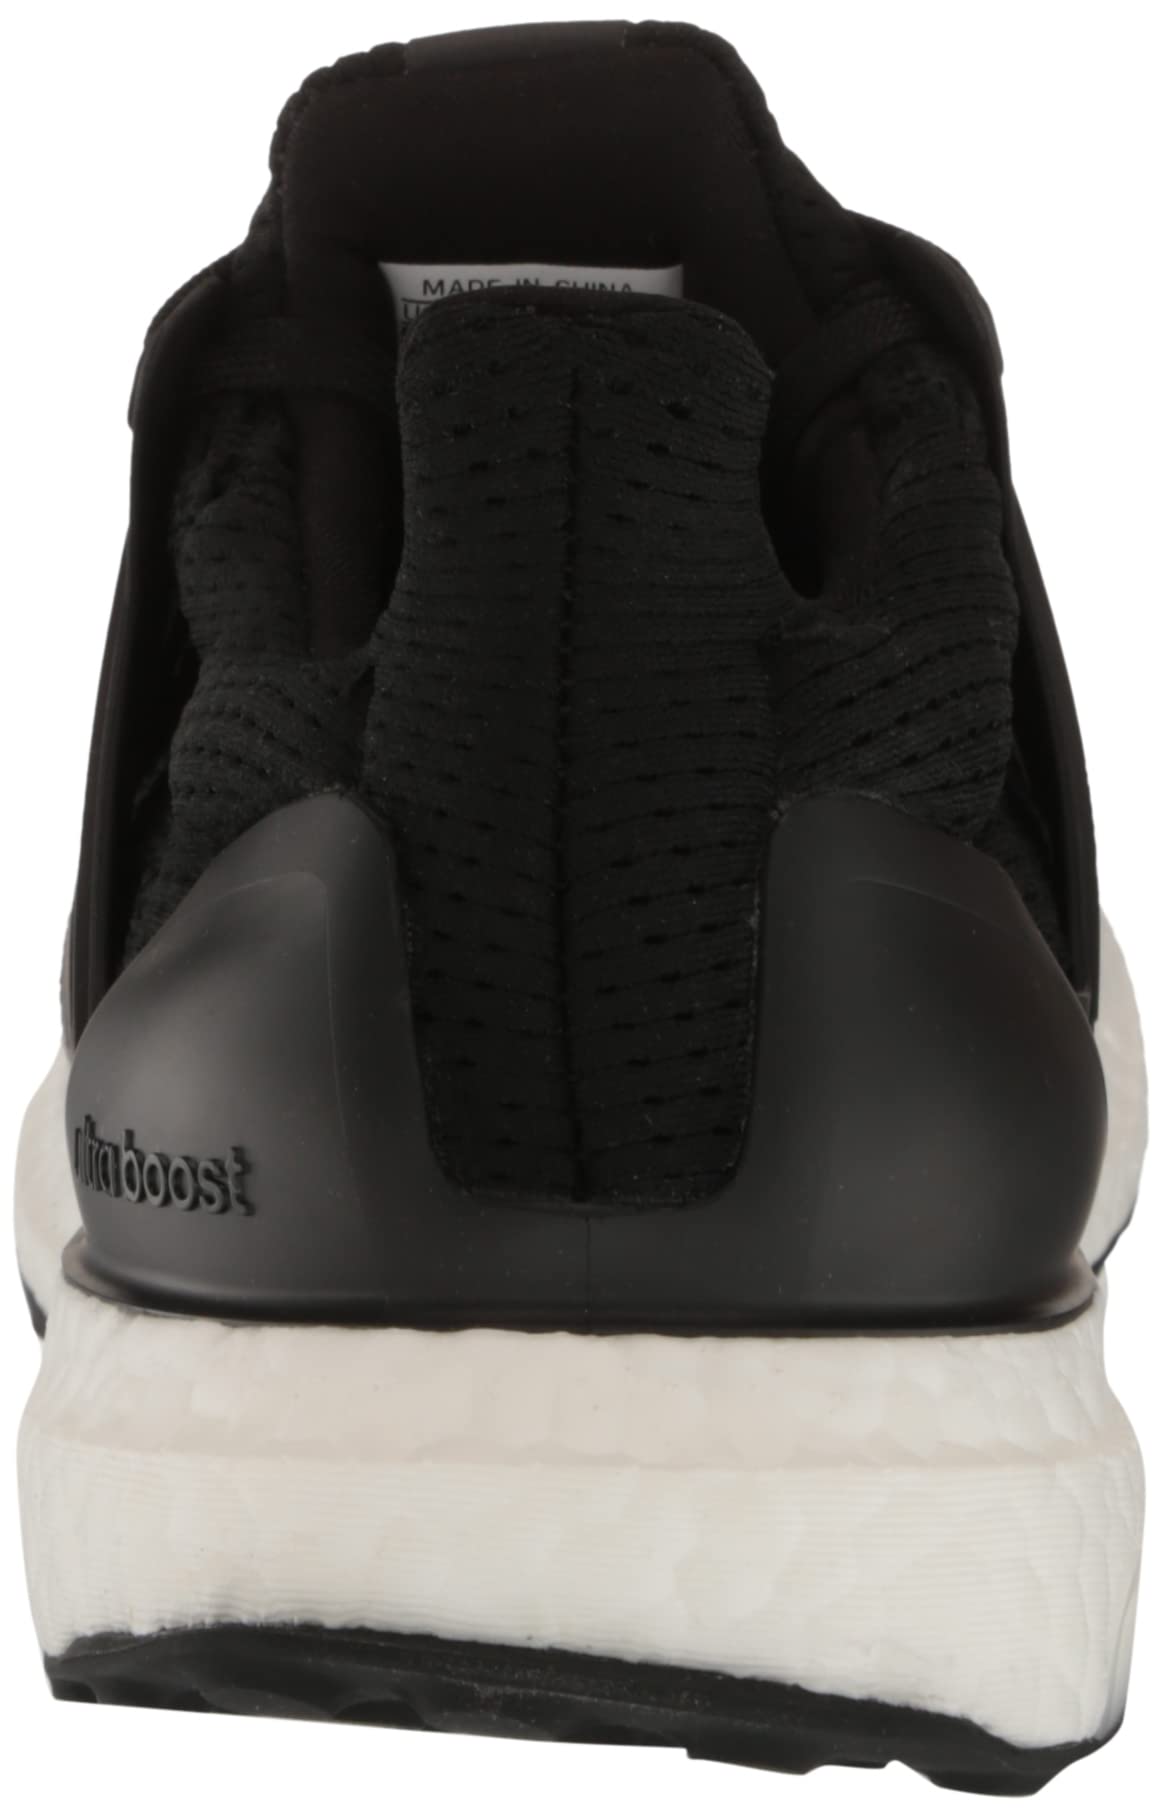 adidas Ultraboost 1.0 Running Shoe, Black/Black/Beam Green, 6.5 US Unisex Big Kid